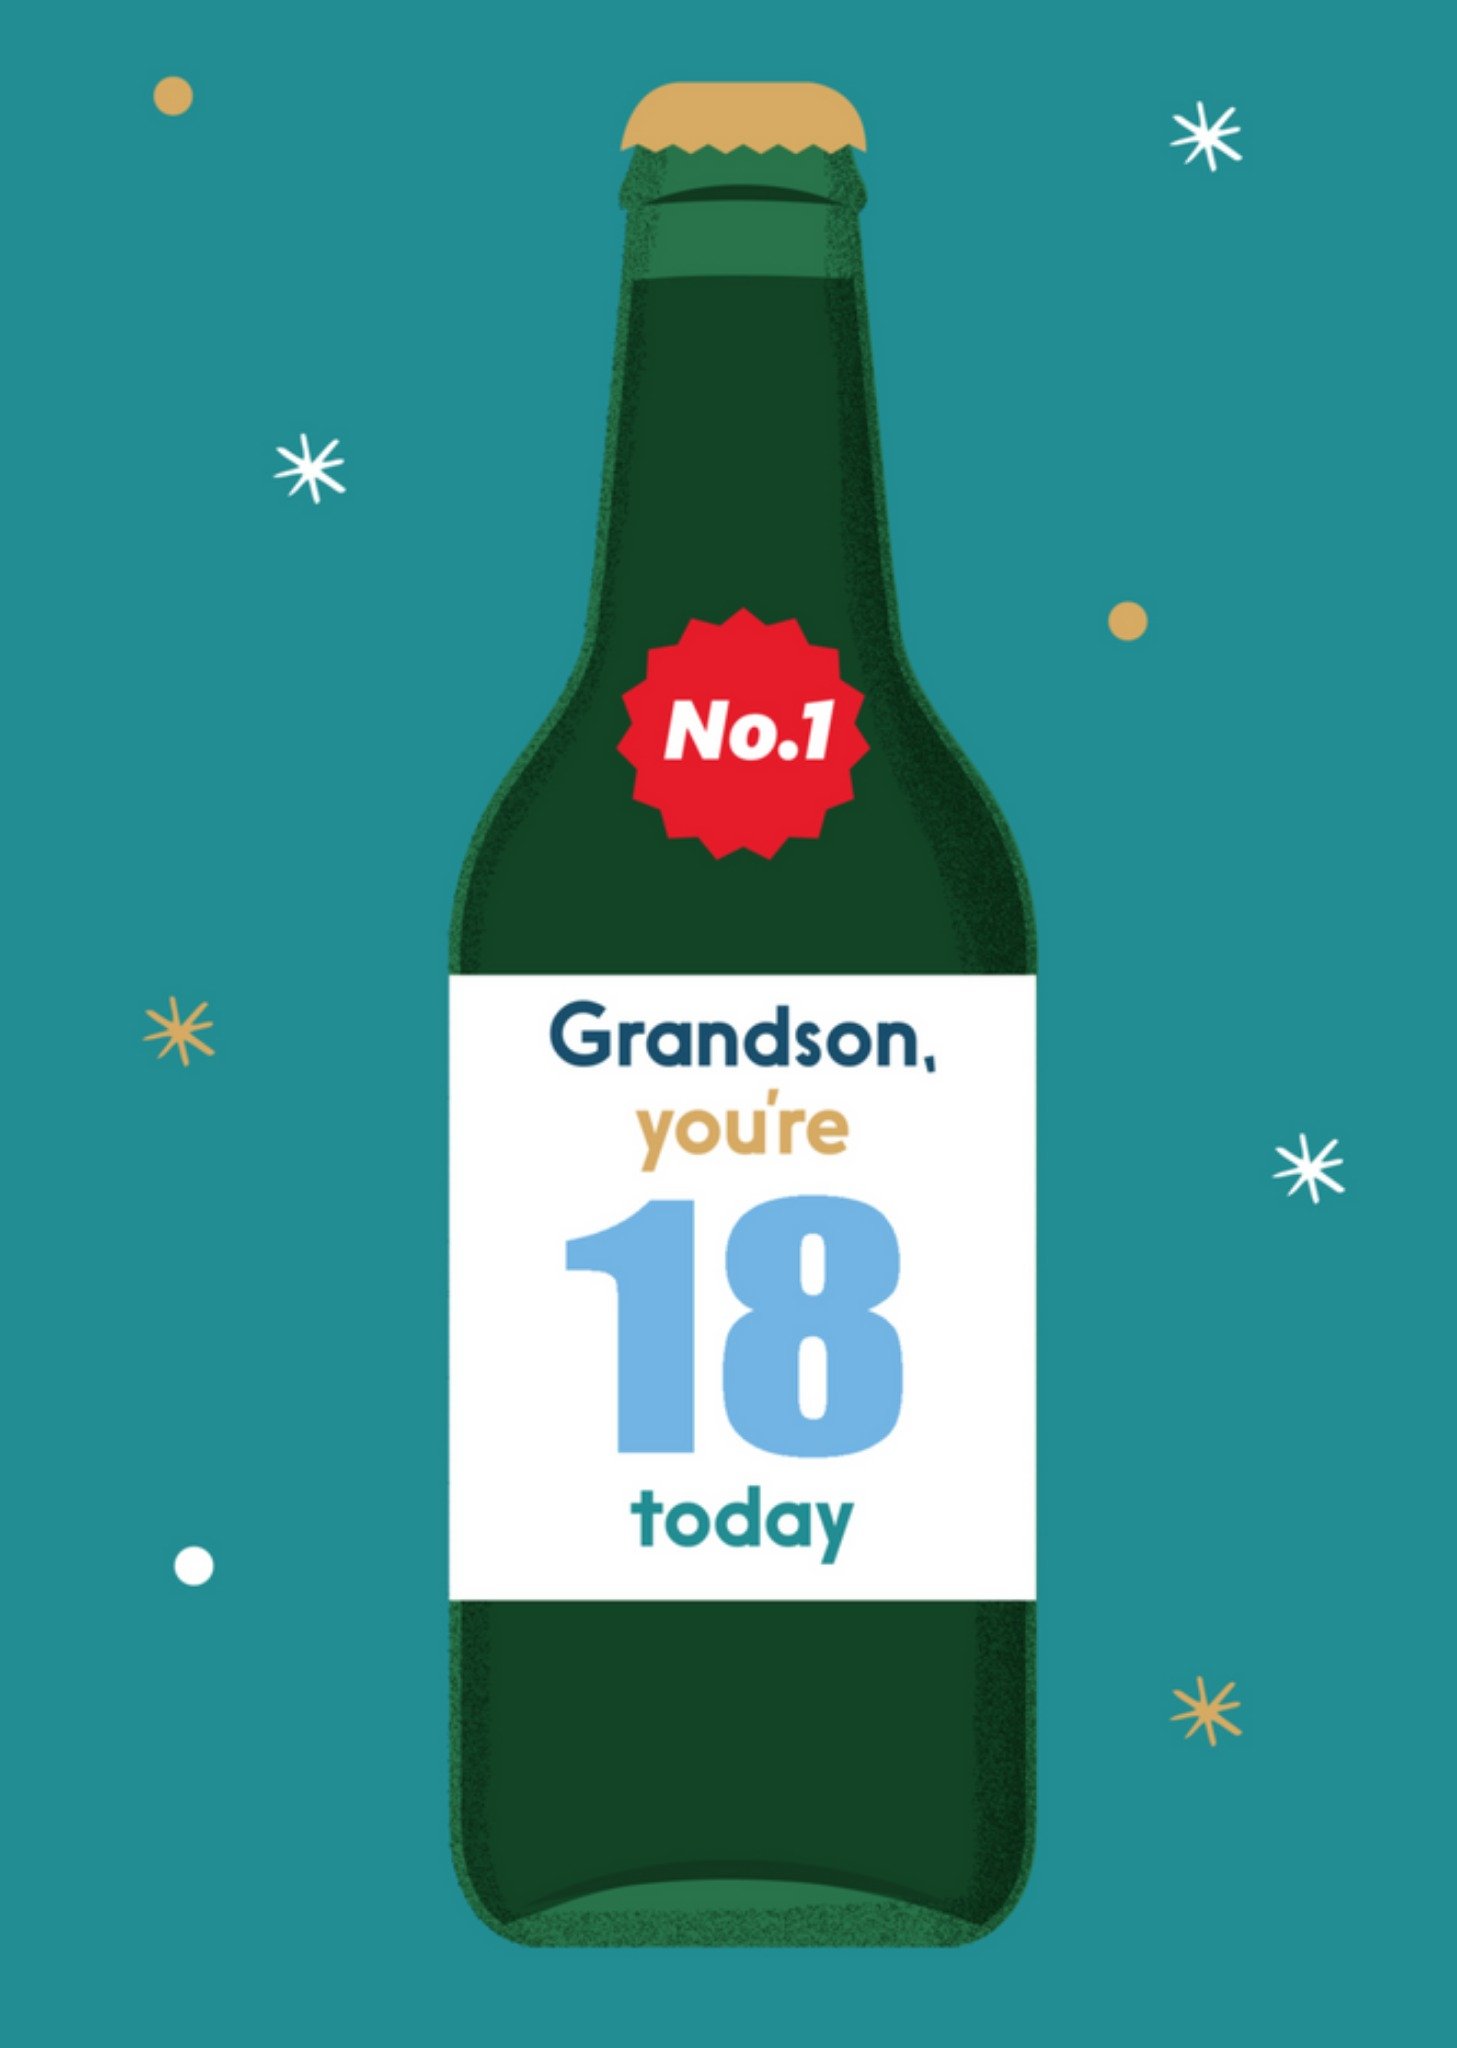 Verjaardagskaart - No. 1 grandson